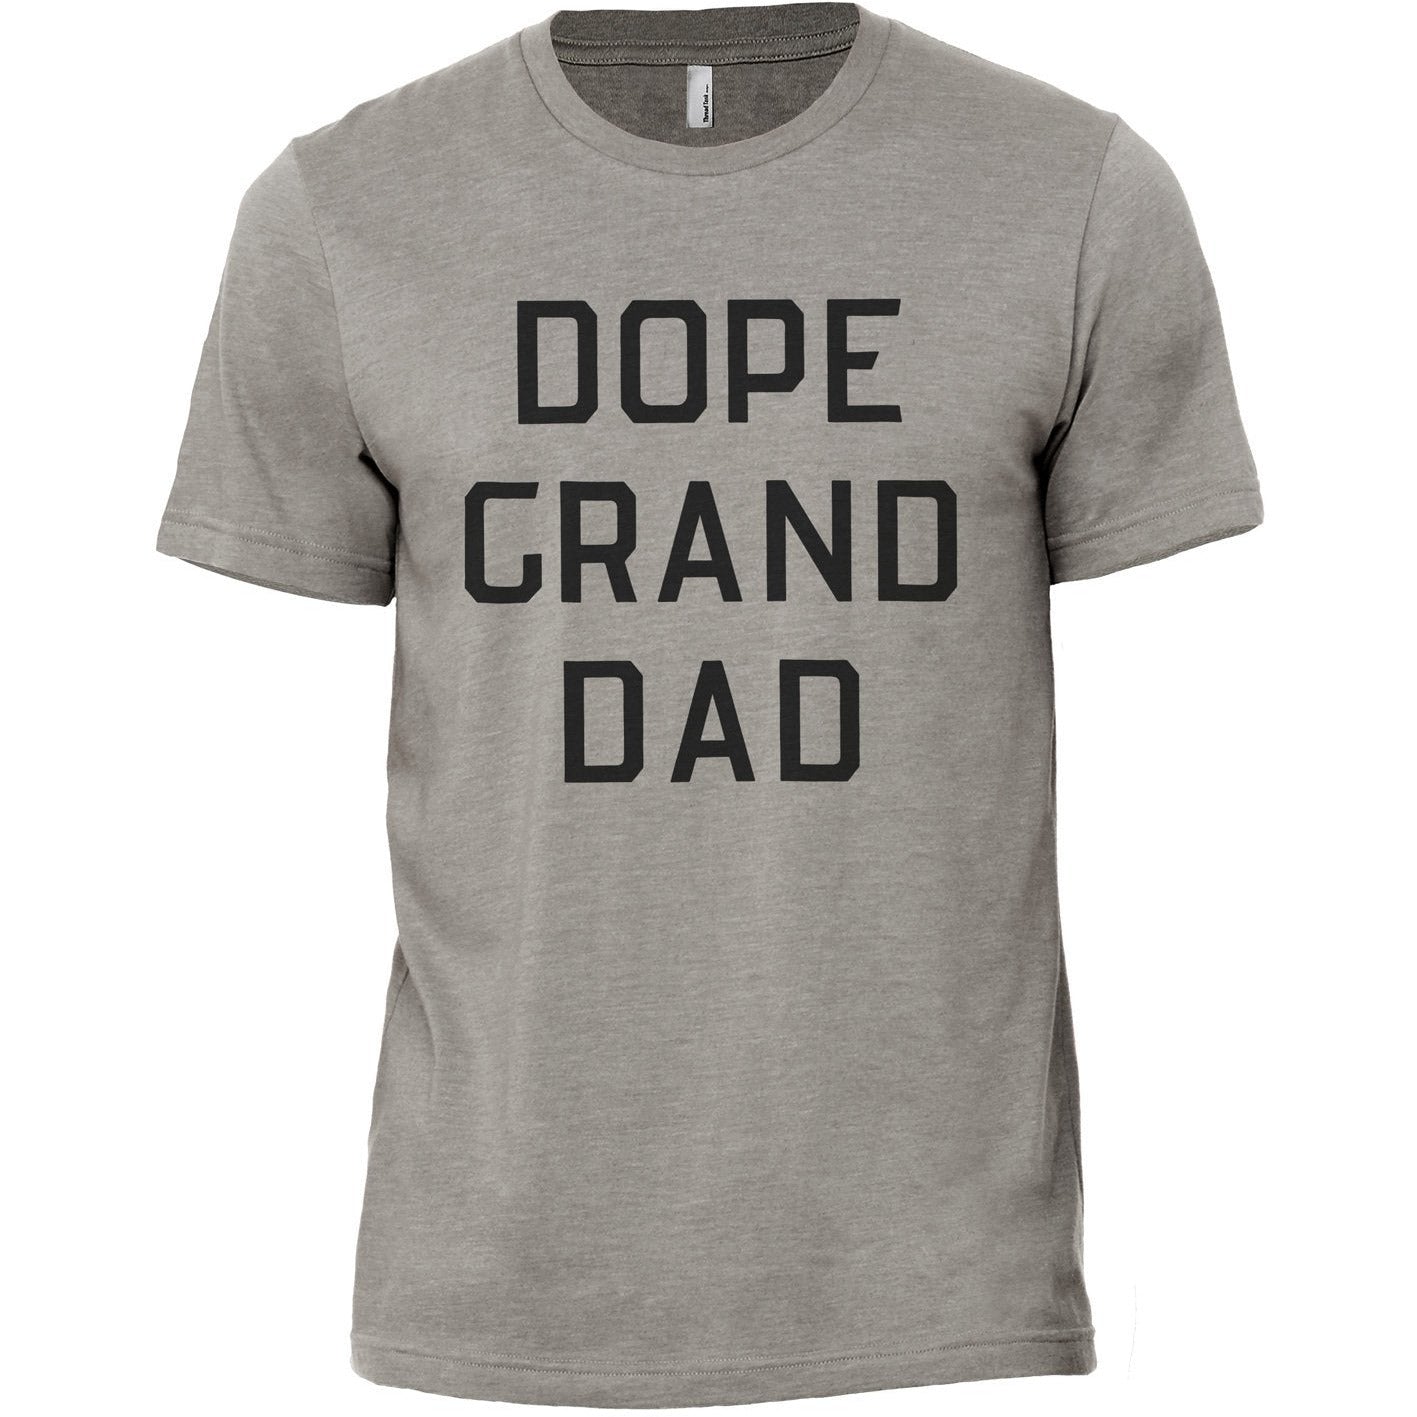 Dope Granddad Military Grey Printed Graphic Men's Crew T-Shirt Tee